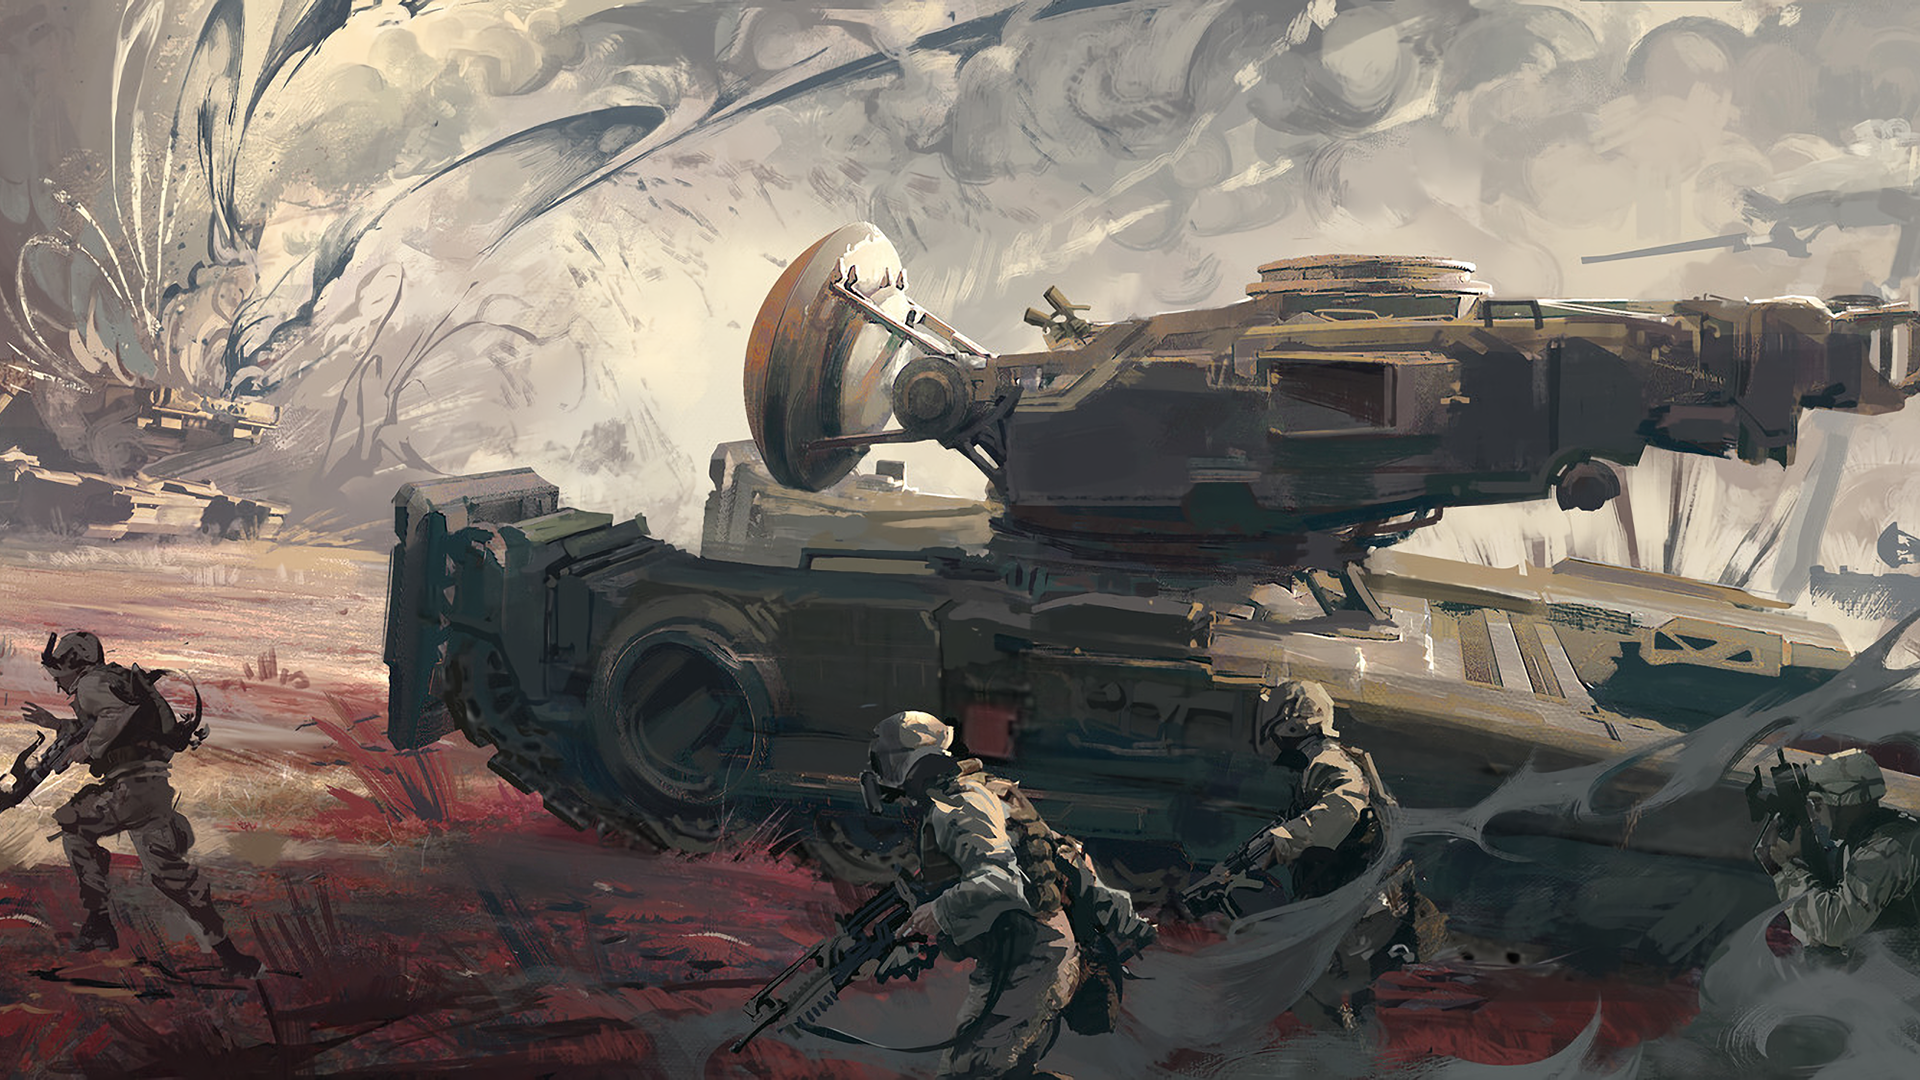 General 1920x1080 digital art tank soldier artwork vehicle military